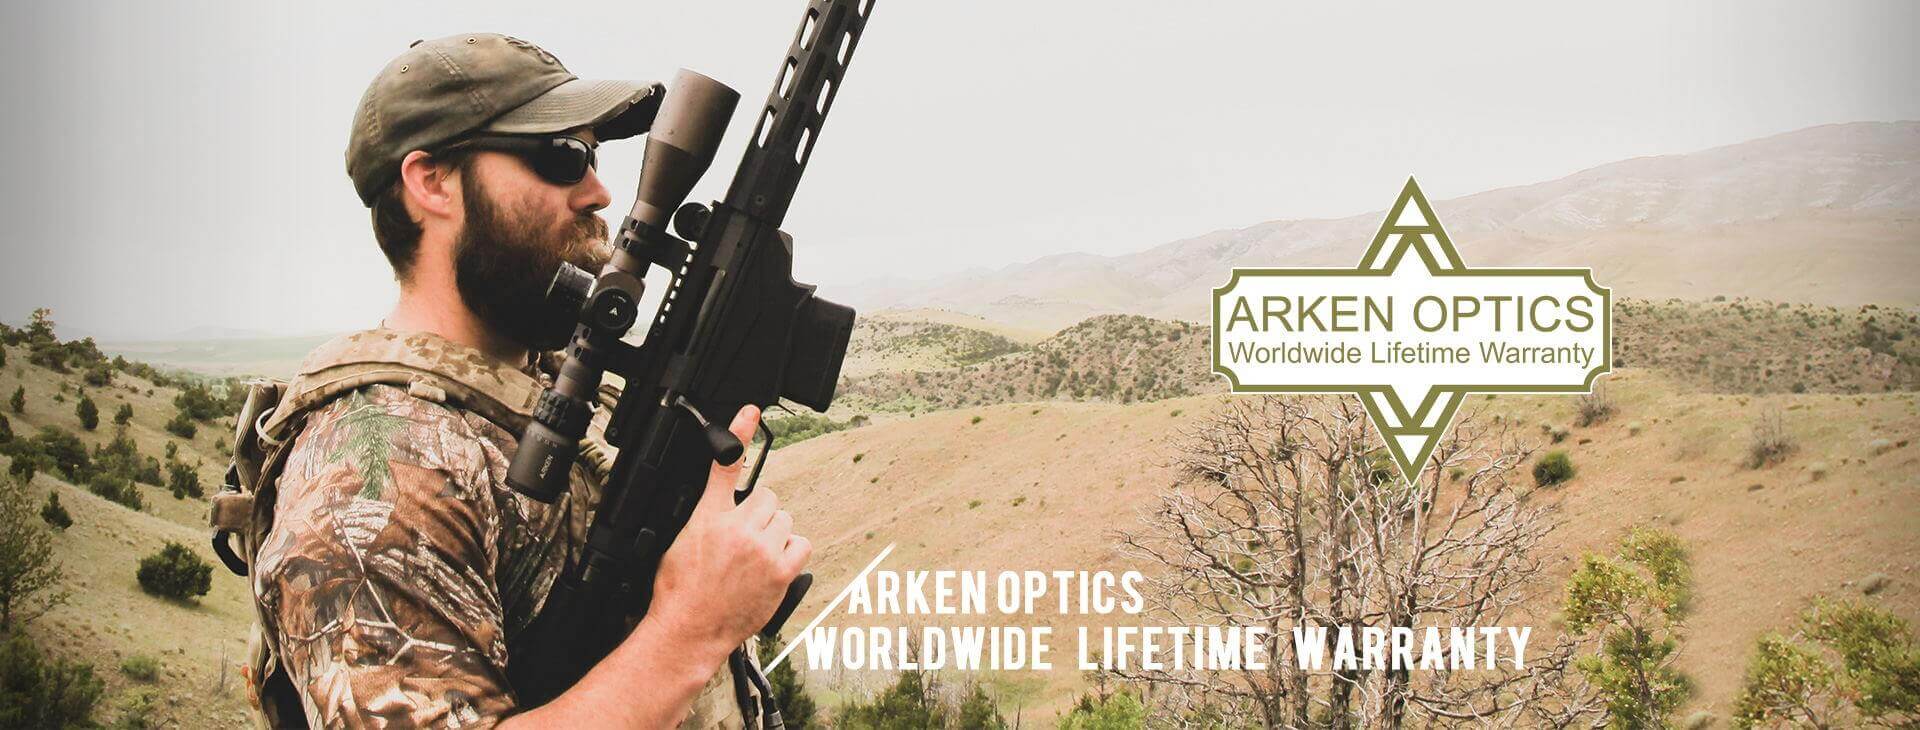 Arken Optics Warranty